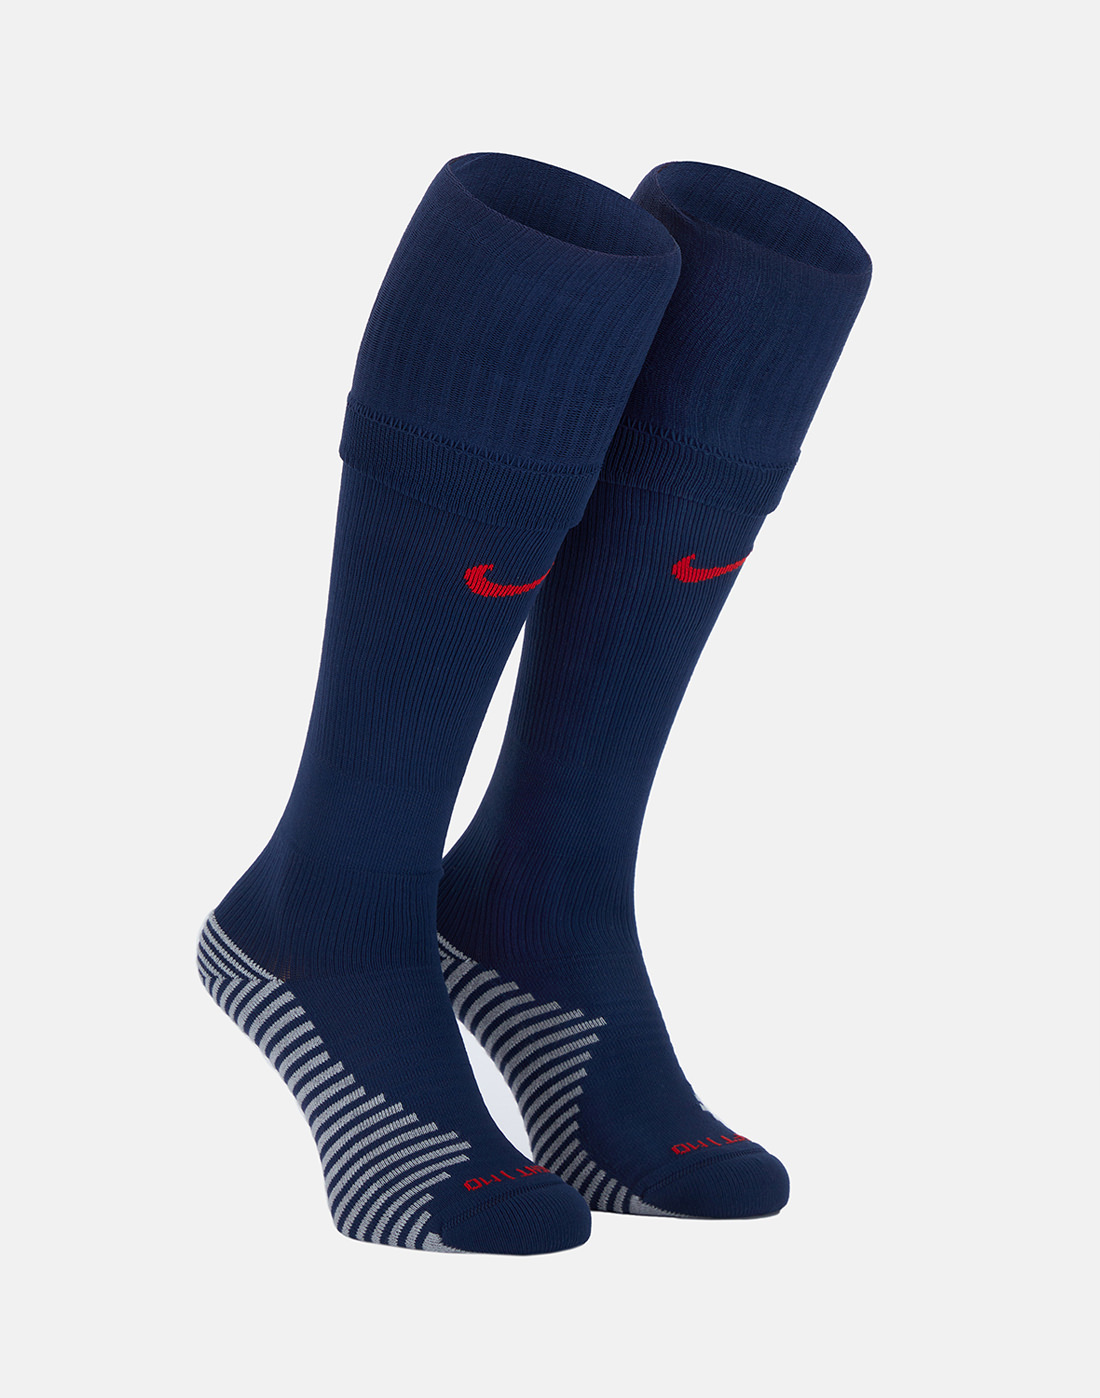 Nike Adults PSG Home Socks - Navy | Life Style Sports UK